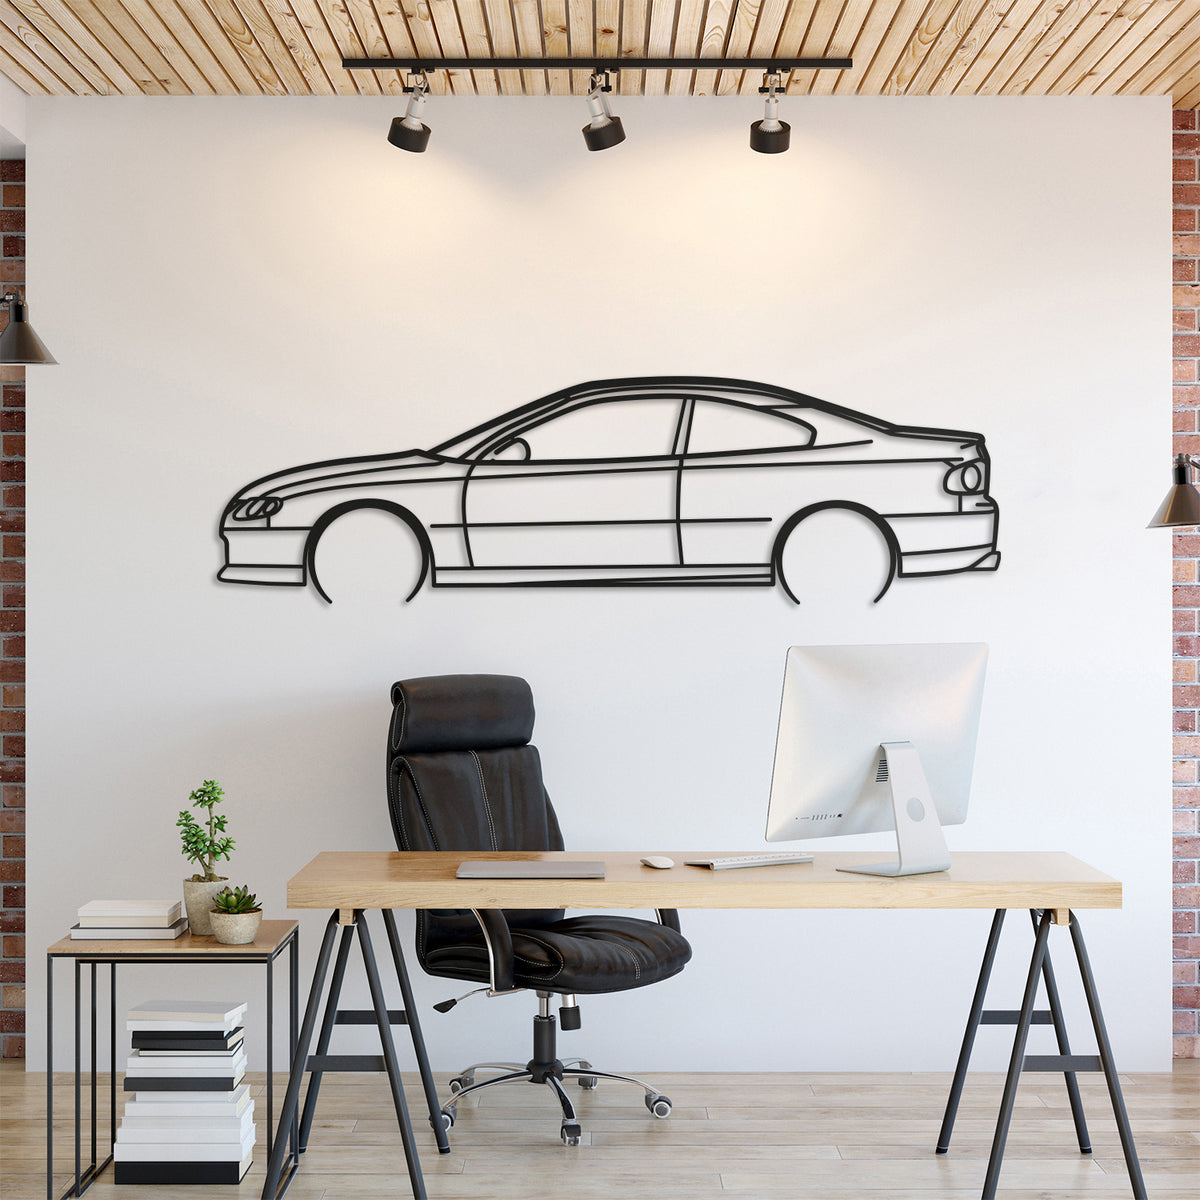 Monaro V8 Detailed Metal Car Wall Art - MT1053